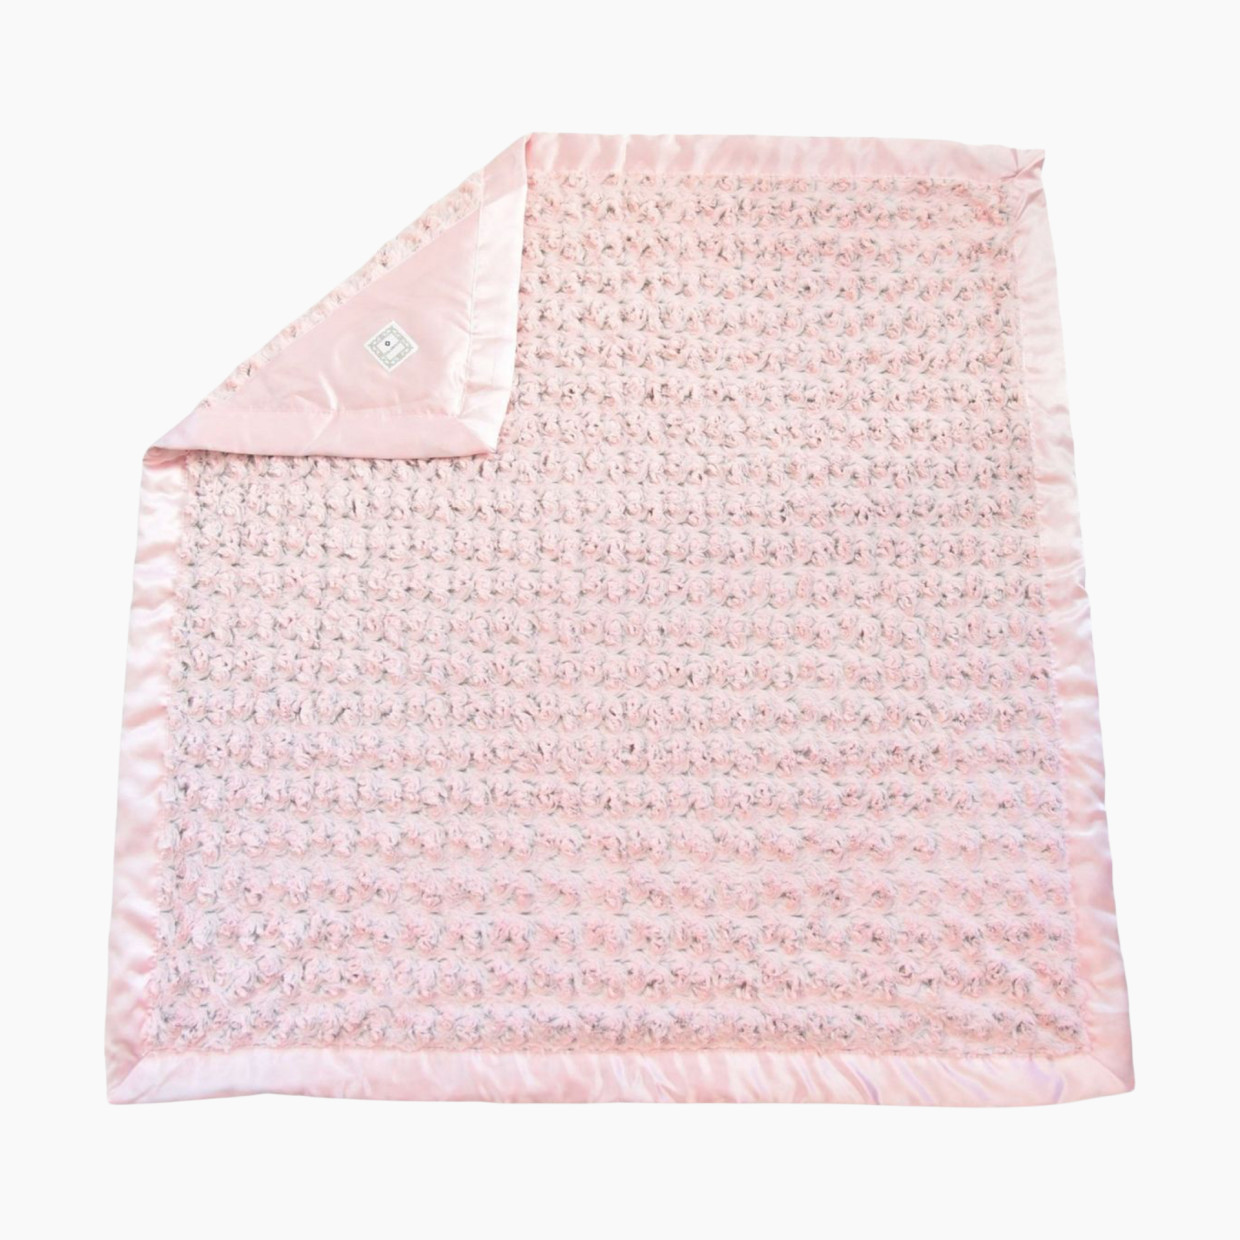 Zalamoon Strollet Blanket - Pink, 36x38.